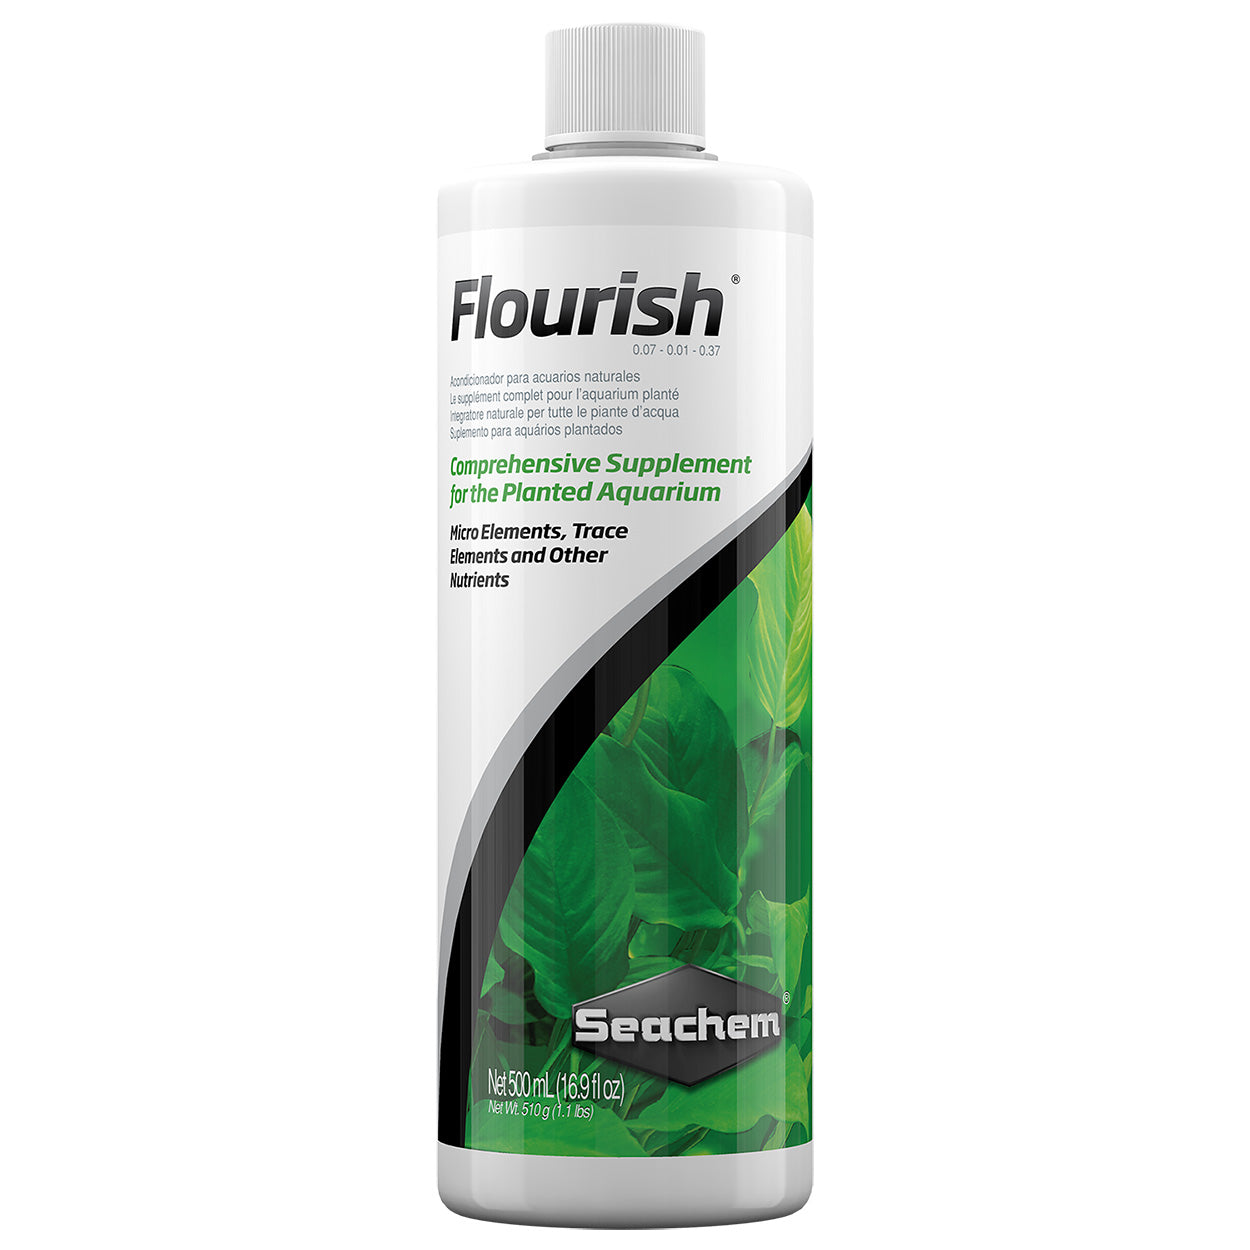 Seachem Flourish 500ml For Sale | Live Freshwater Plant Fertilizer and Supplement | Seachem laboratories